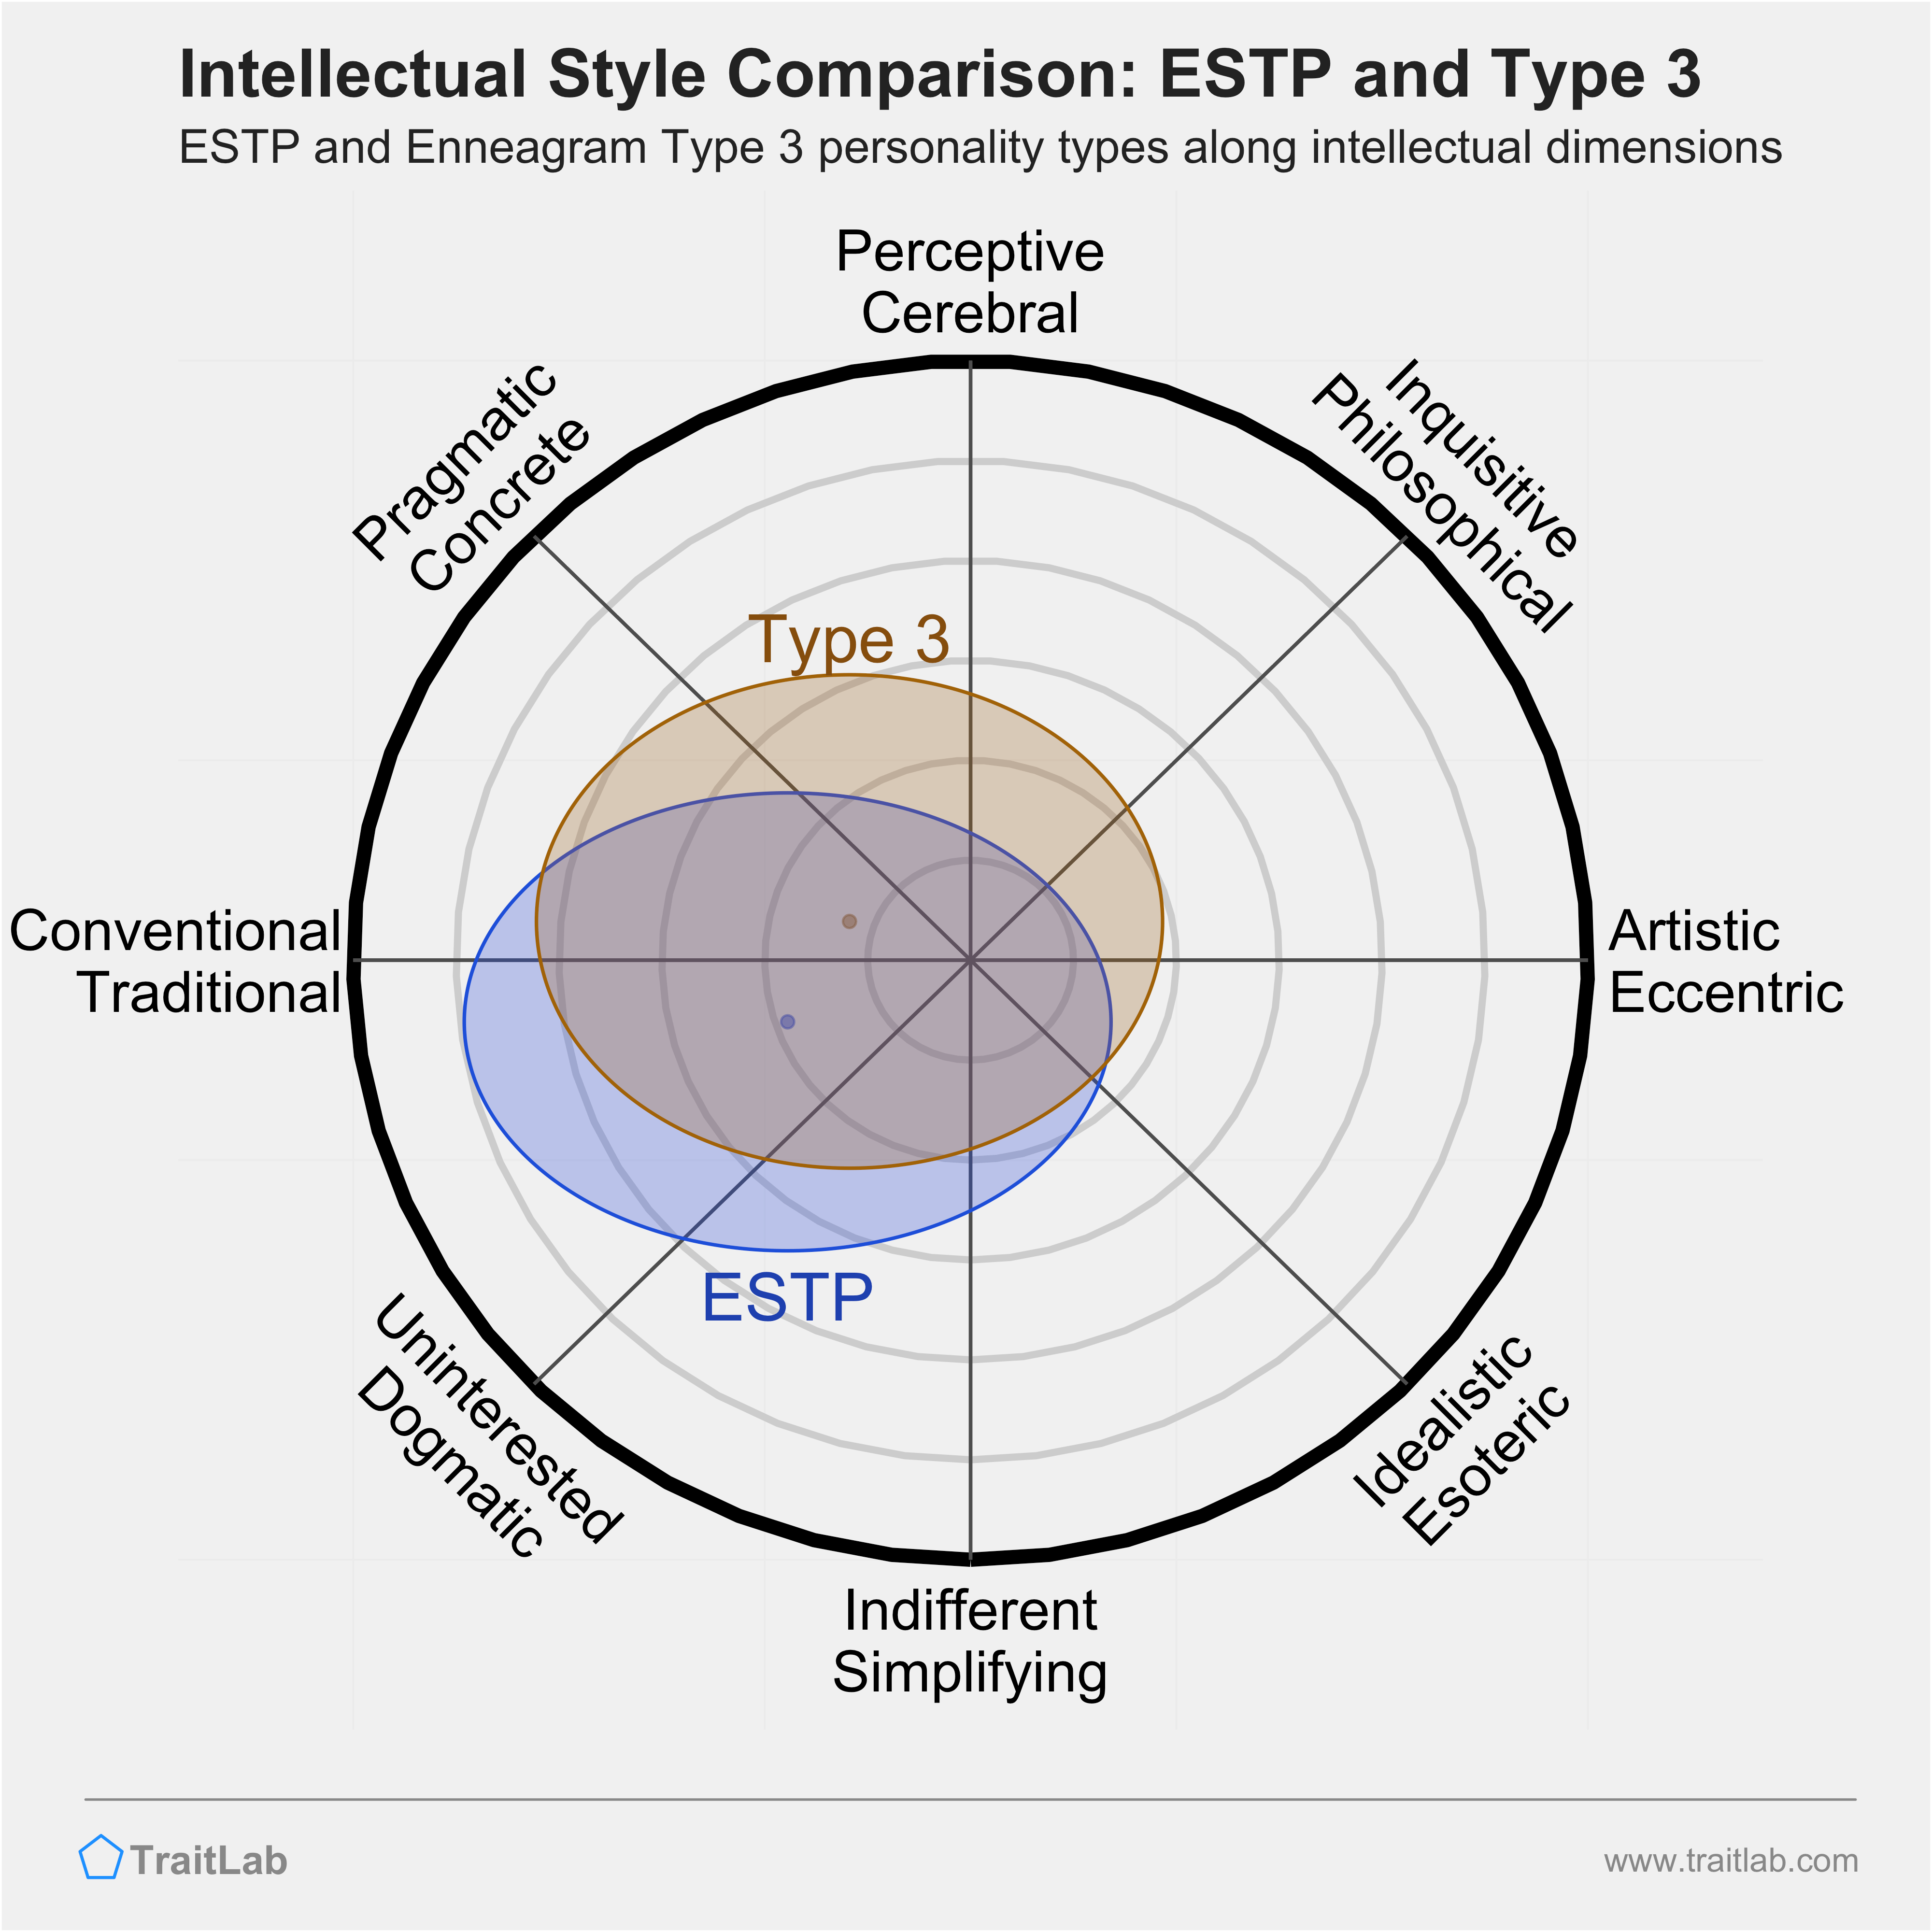 ESTP and Type 3 comparison across intellectual dimensions